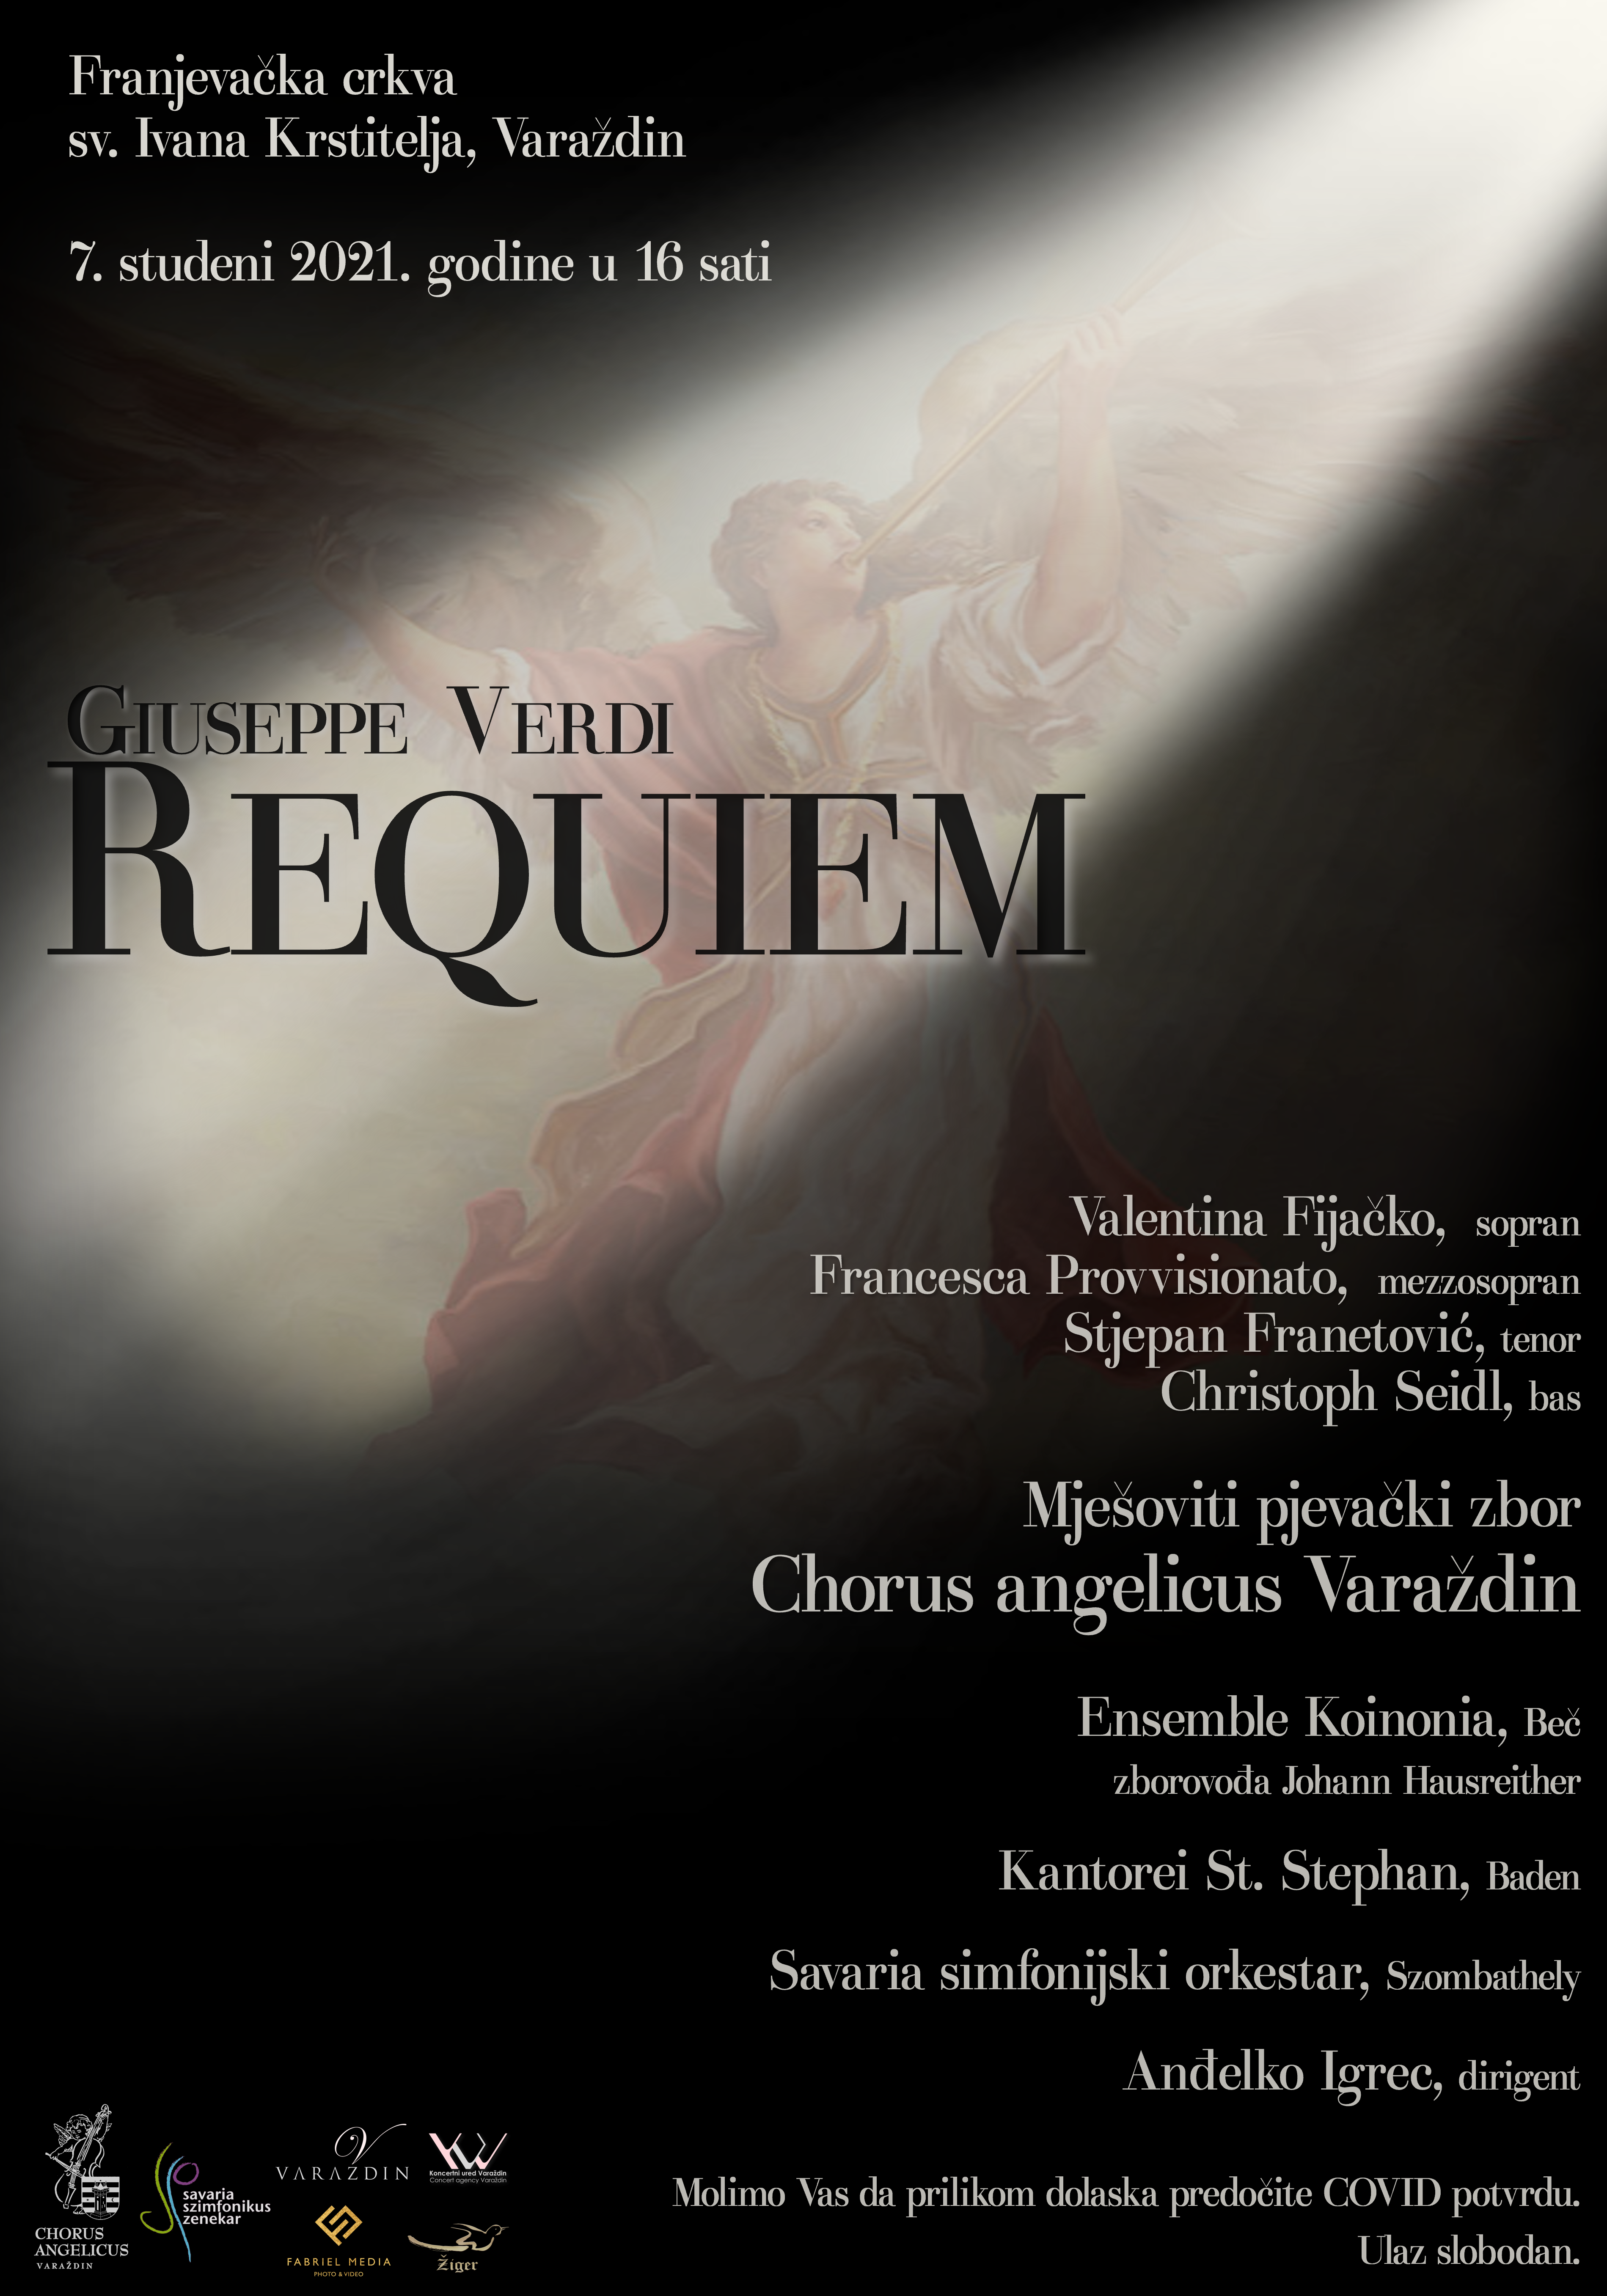 Giuseppe Verdi – Requiemthumbnail - 